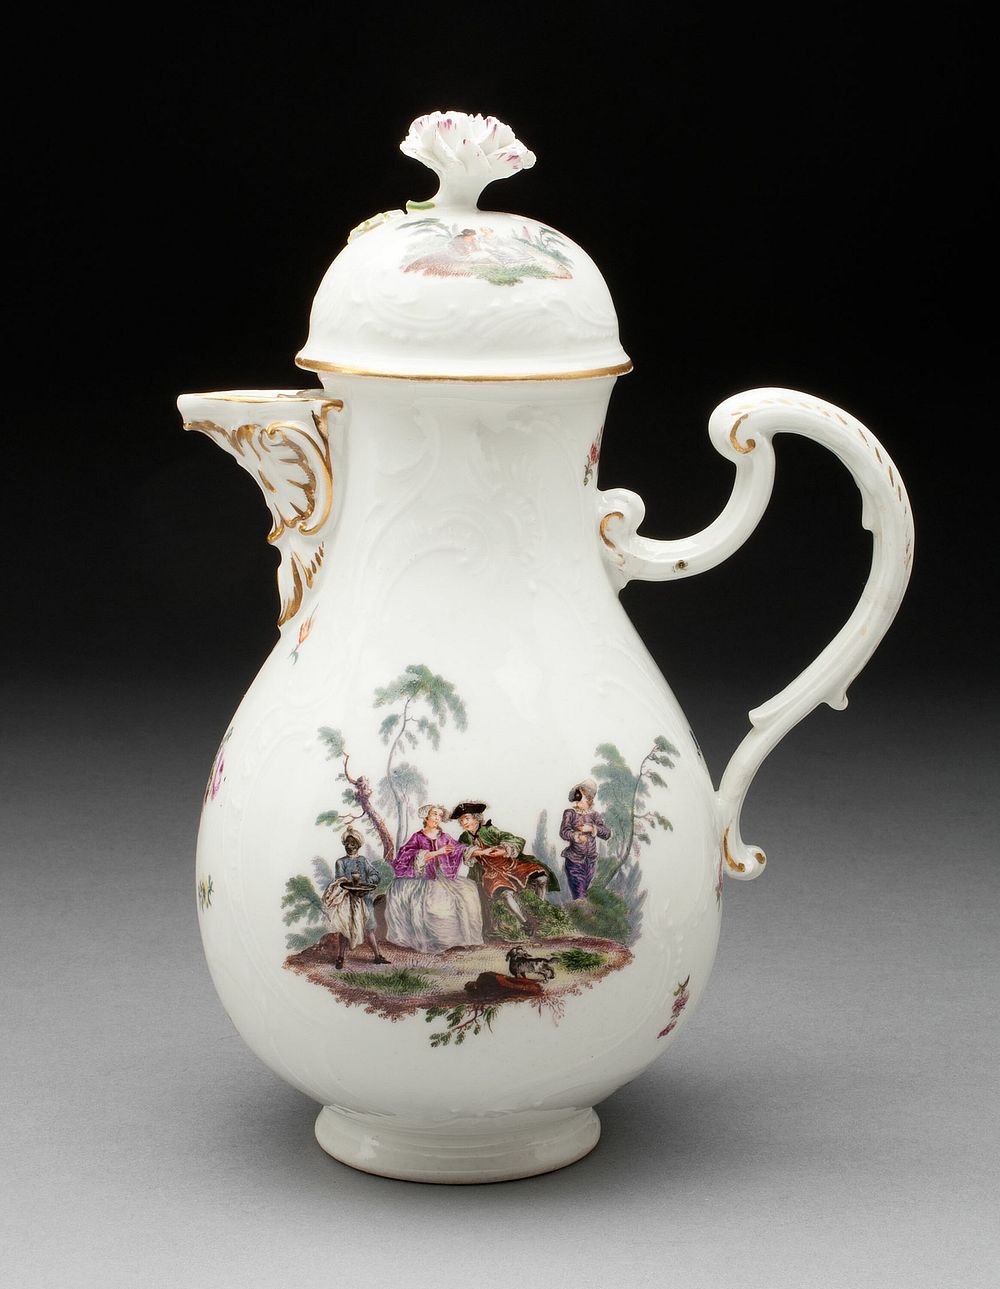 Coffee Pot by Meissen Porcelain Manufactory (Manufacturer)